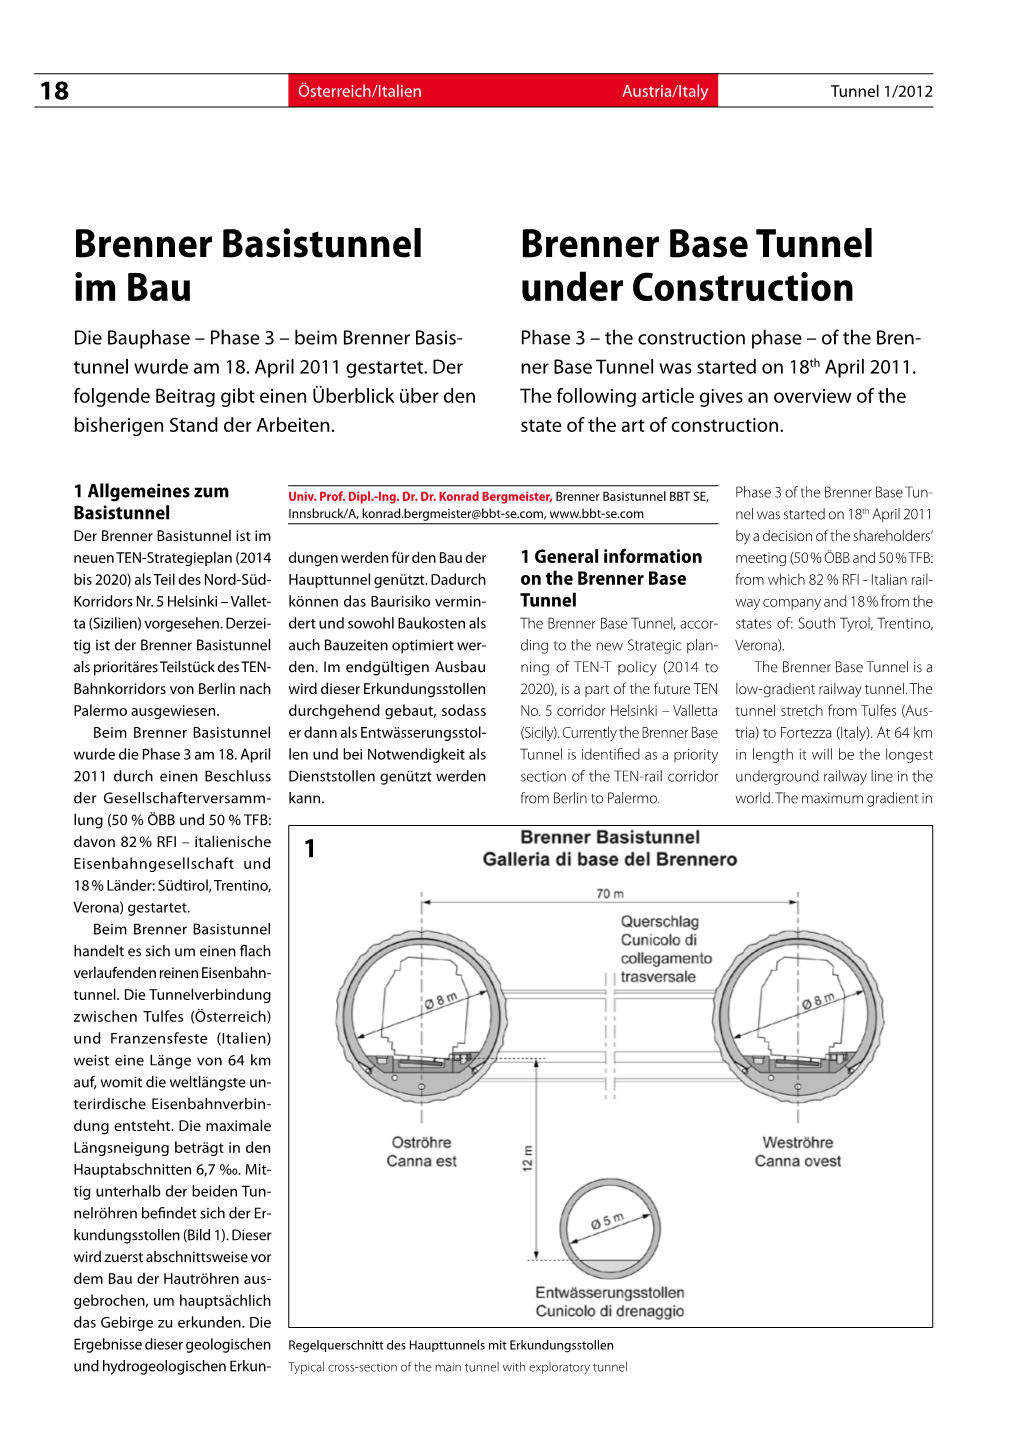 Brenner Basistunnel Im Bau Brenner Base Tunnel Under Construction